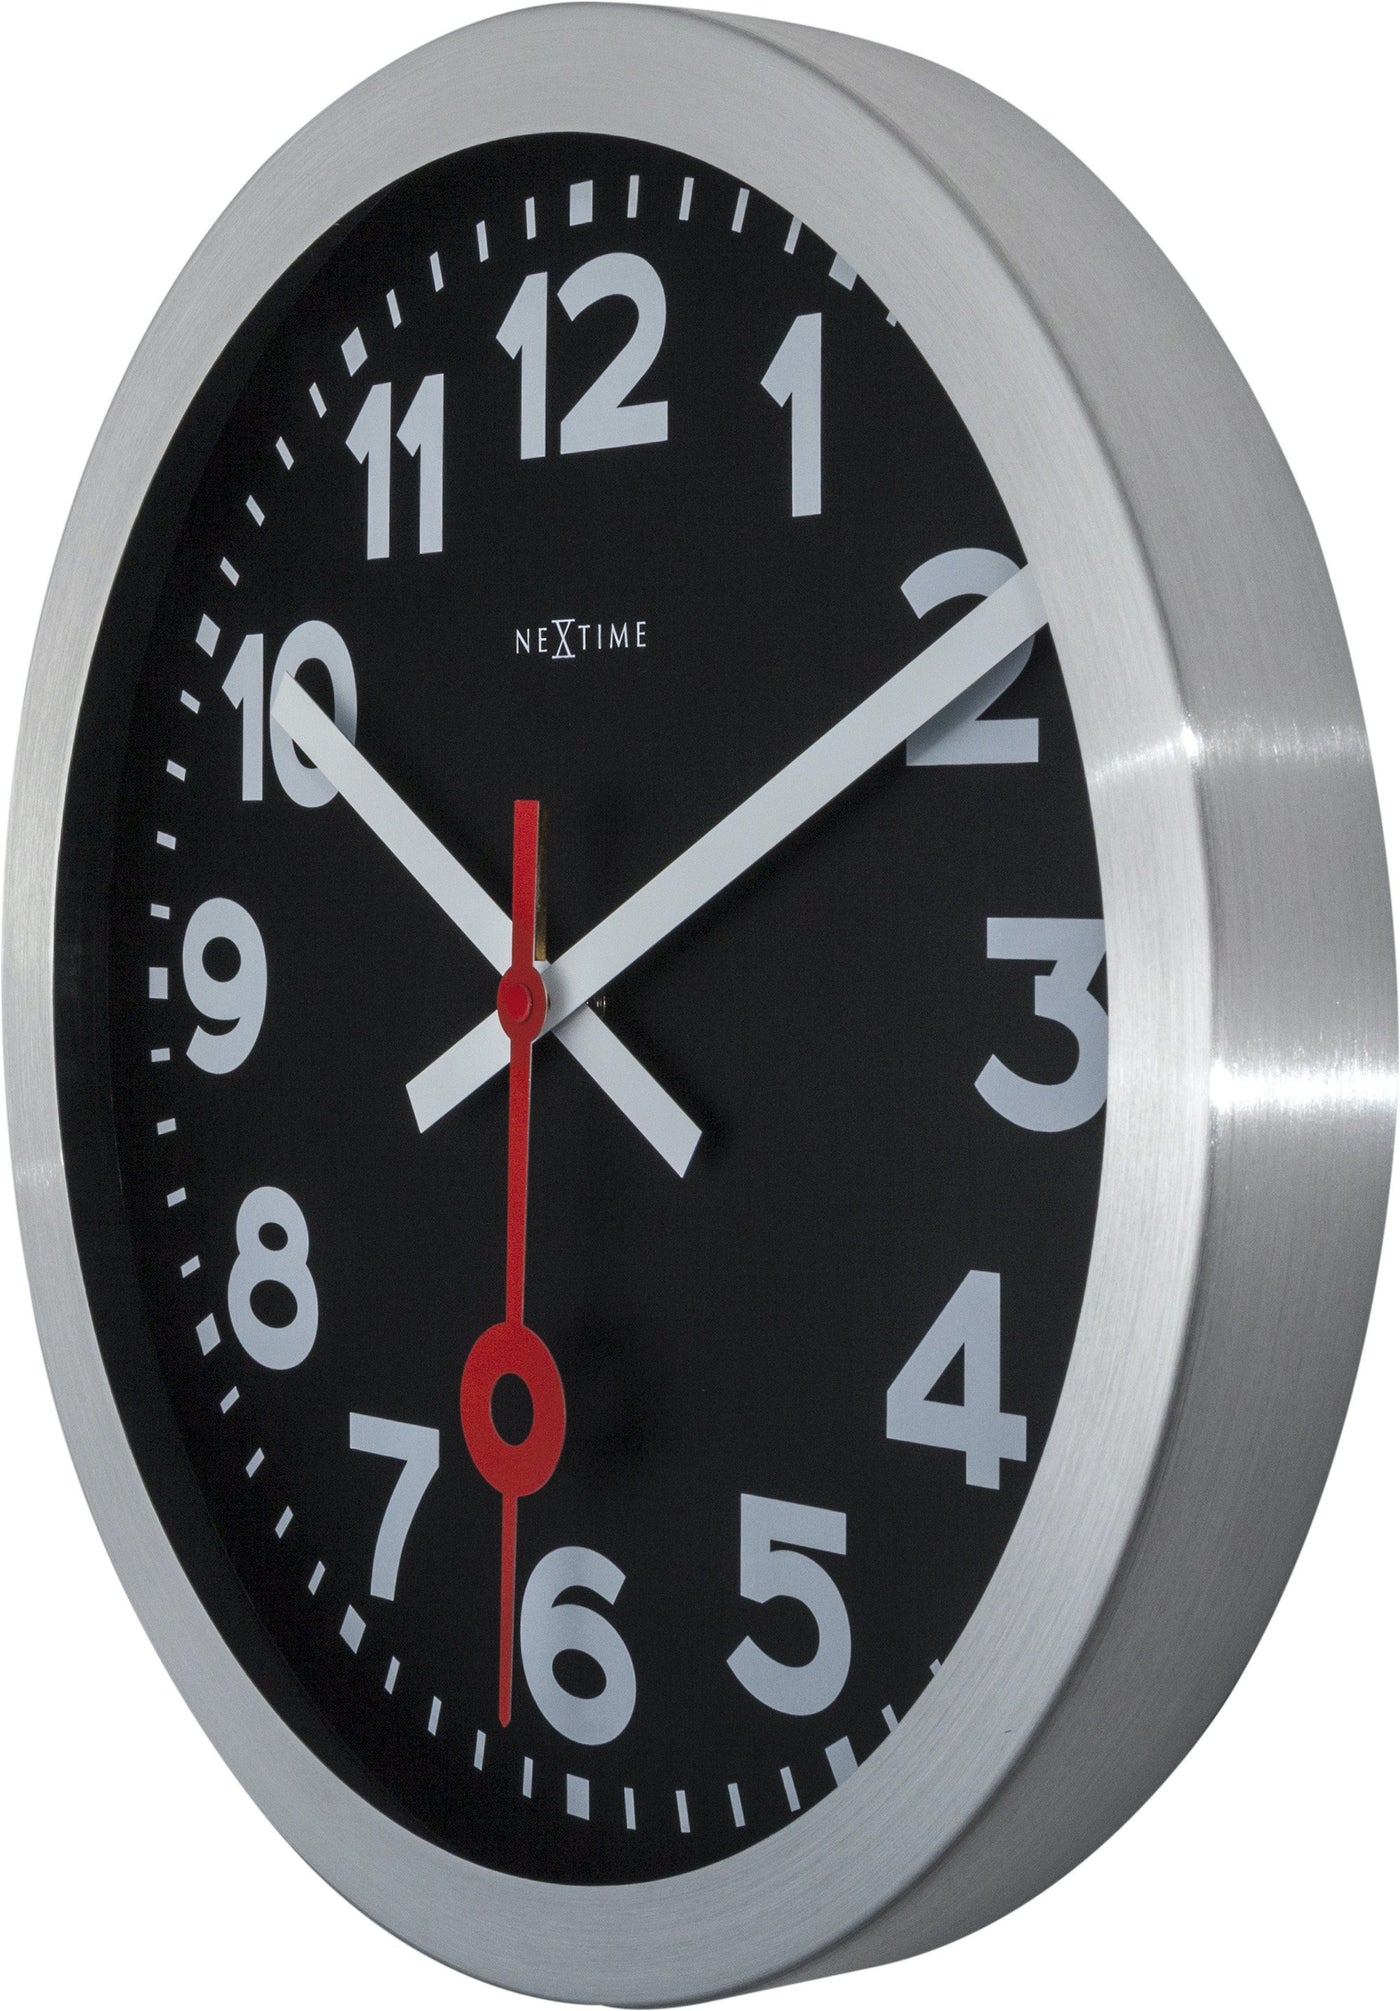 NeXtime Station Number Index Wall Clock Aluminium Black - timeframedclocks